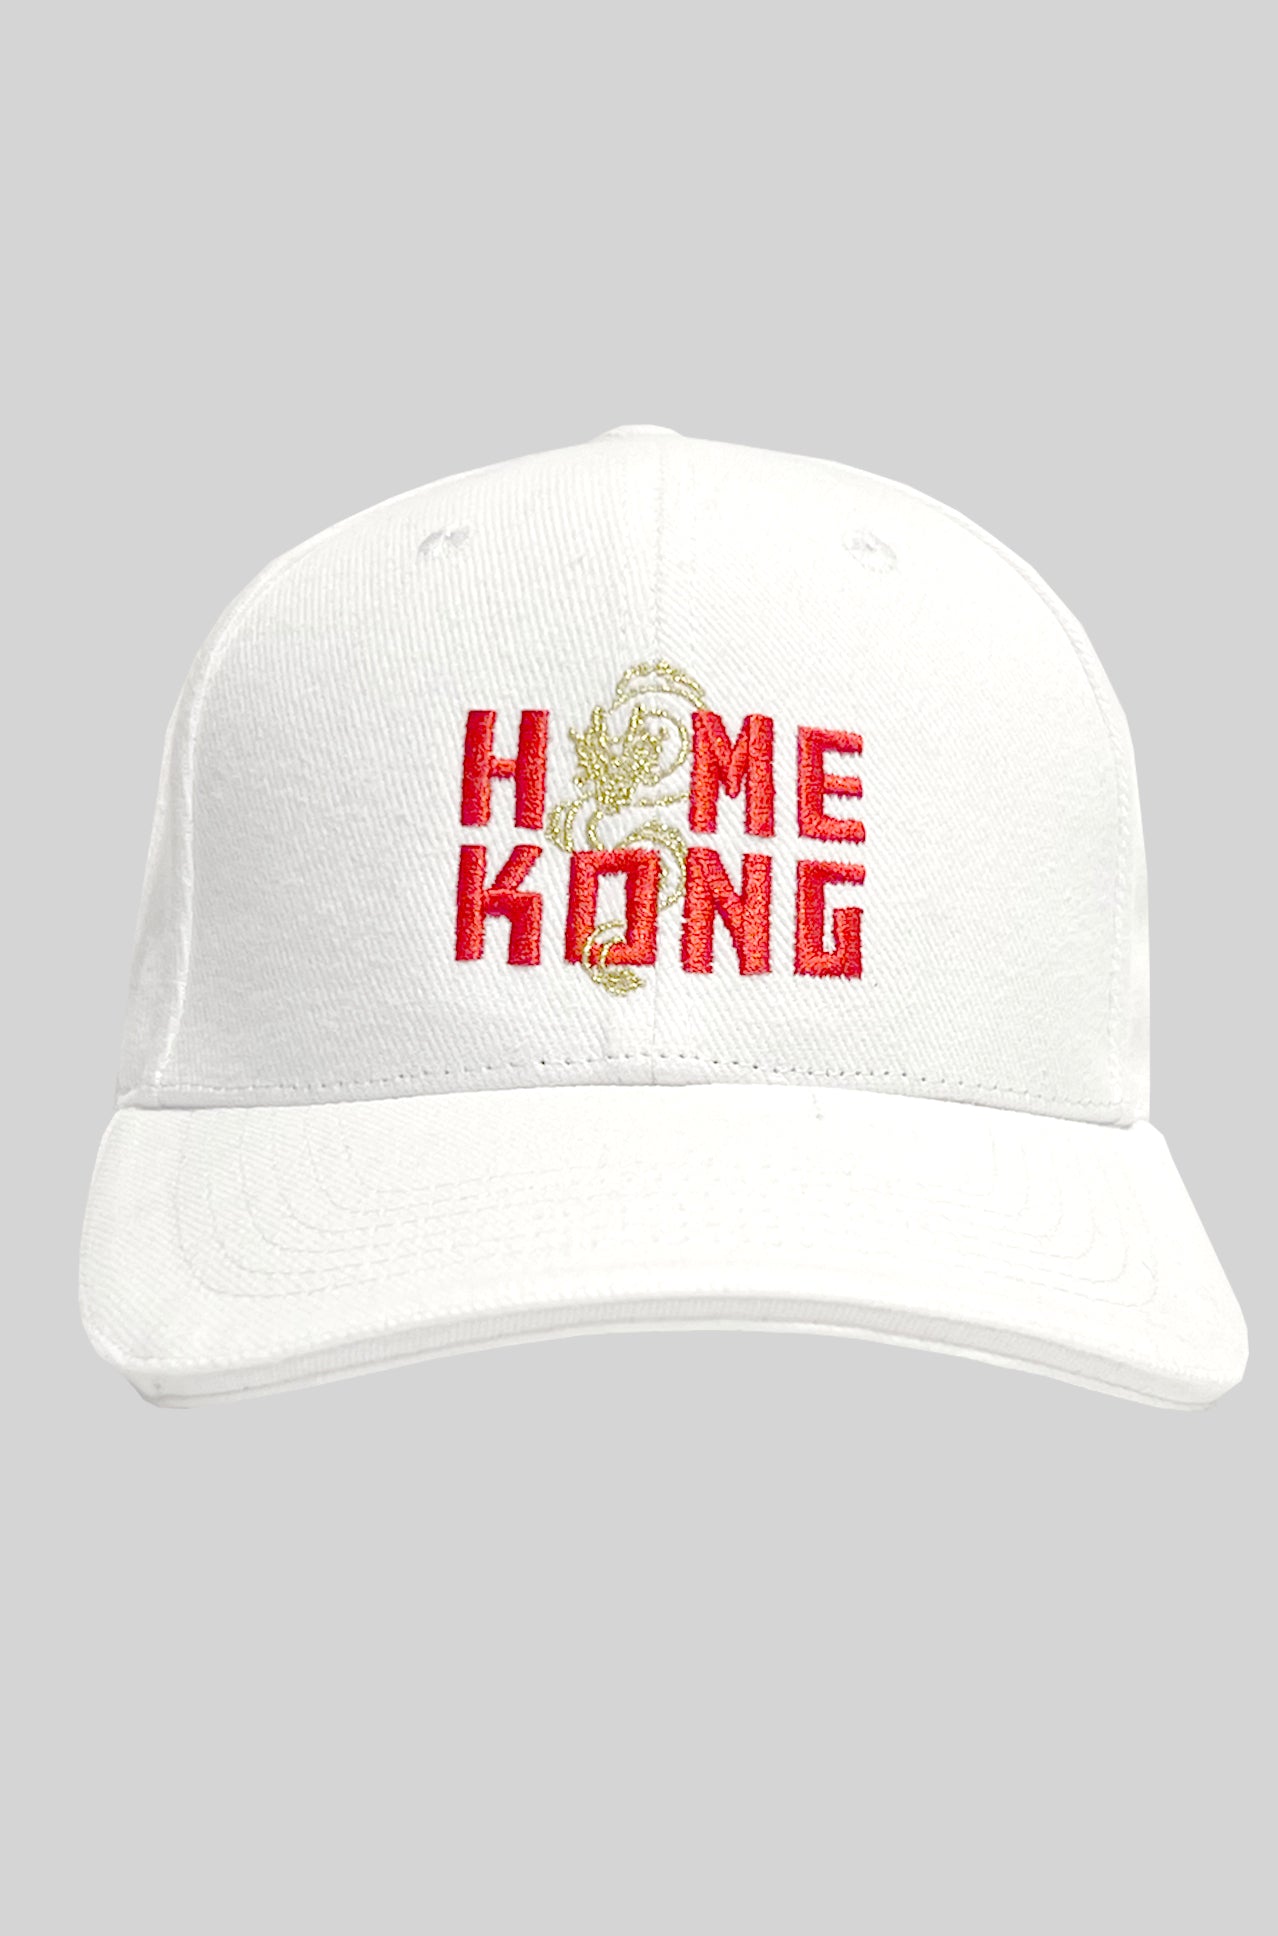 HOME KONG DRAGON CAP